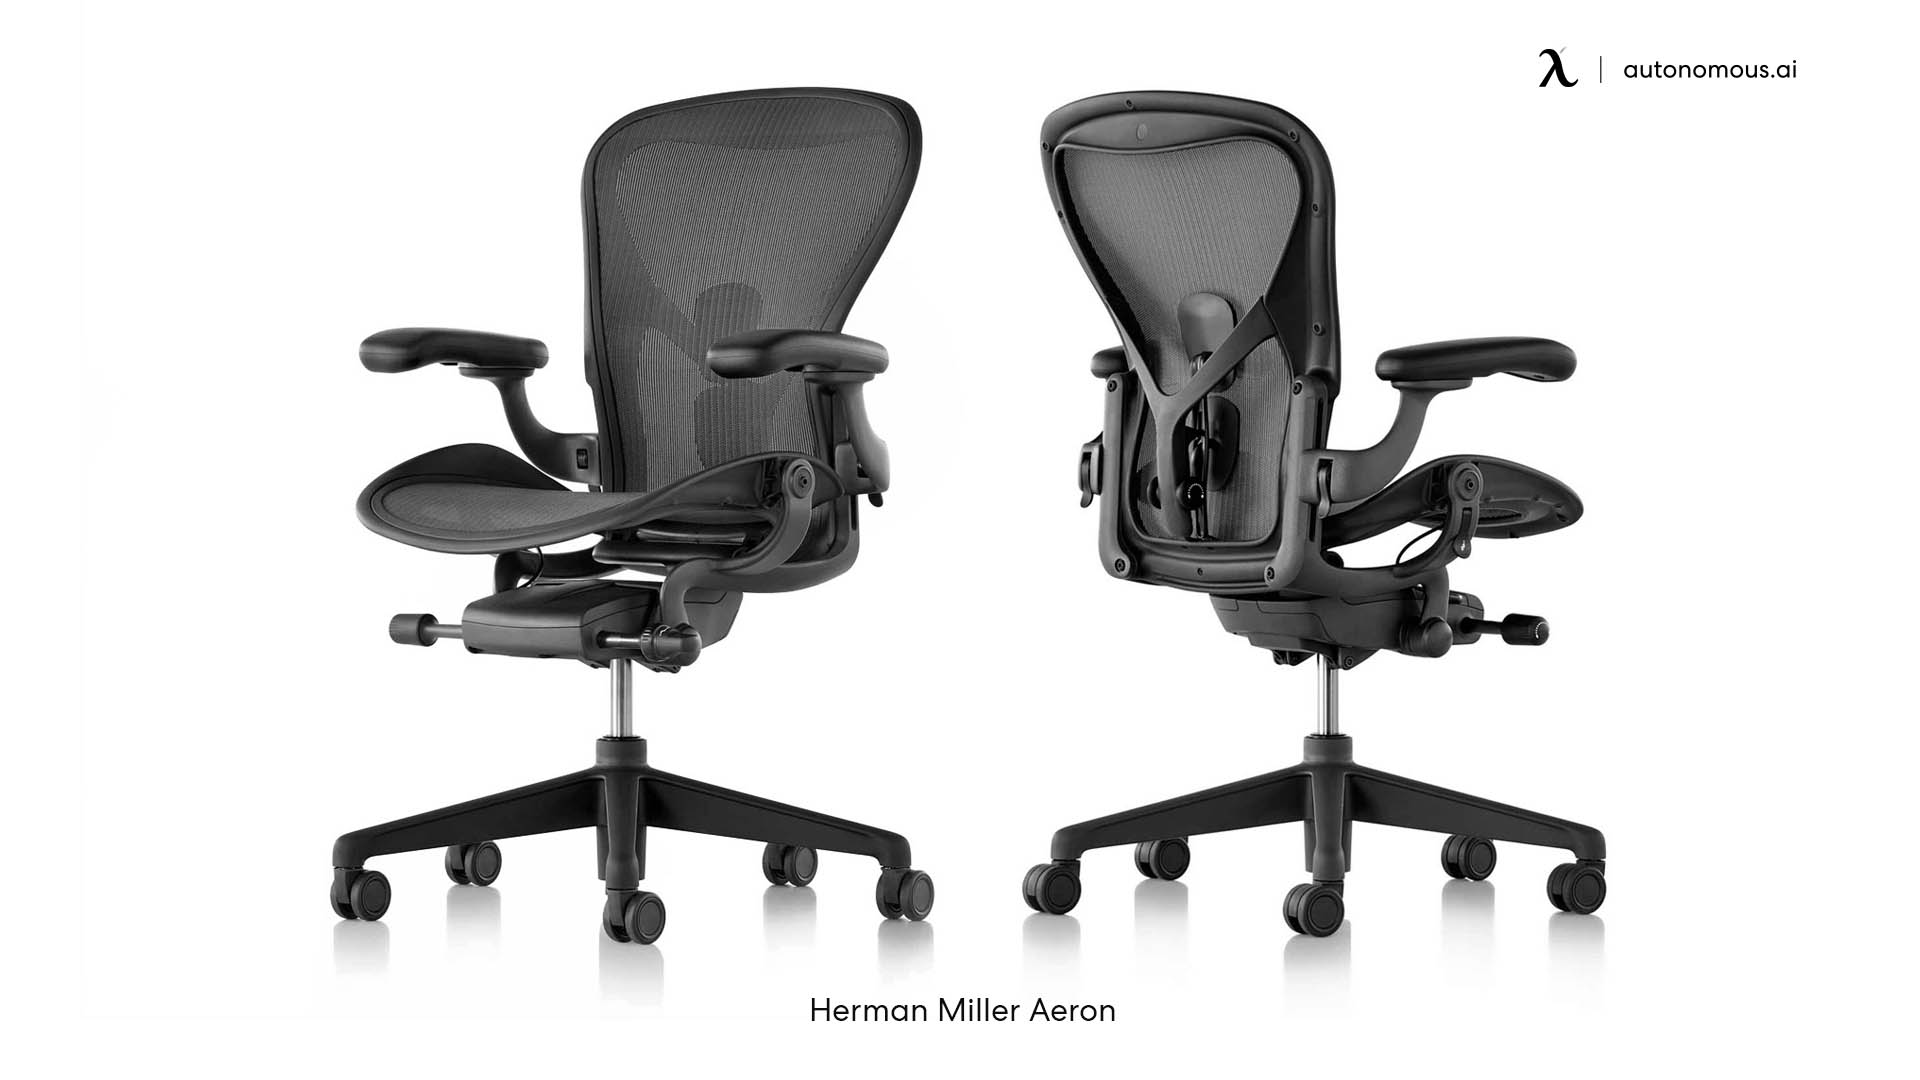 Herman Miller Aeron desk chair with wheels